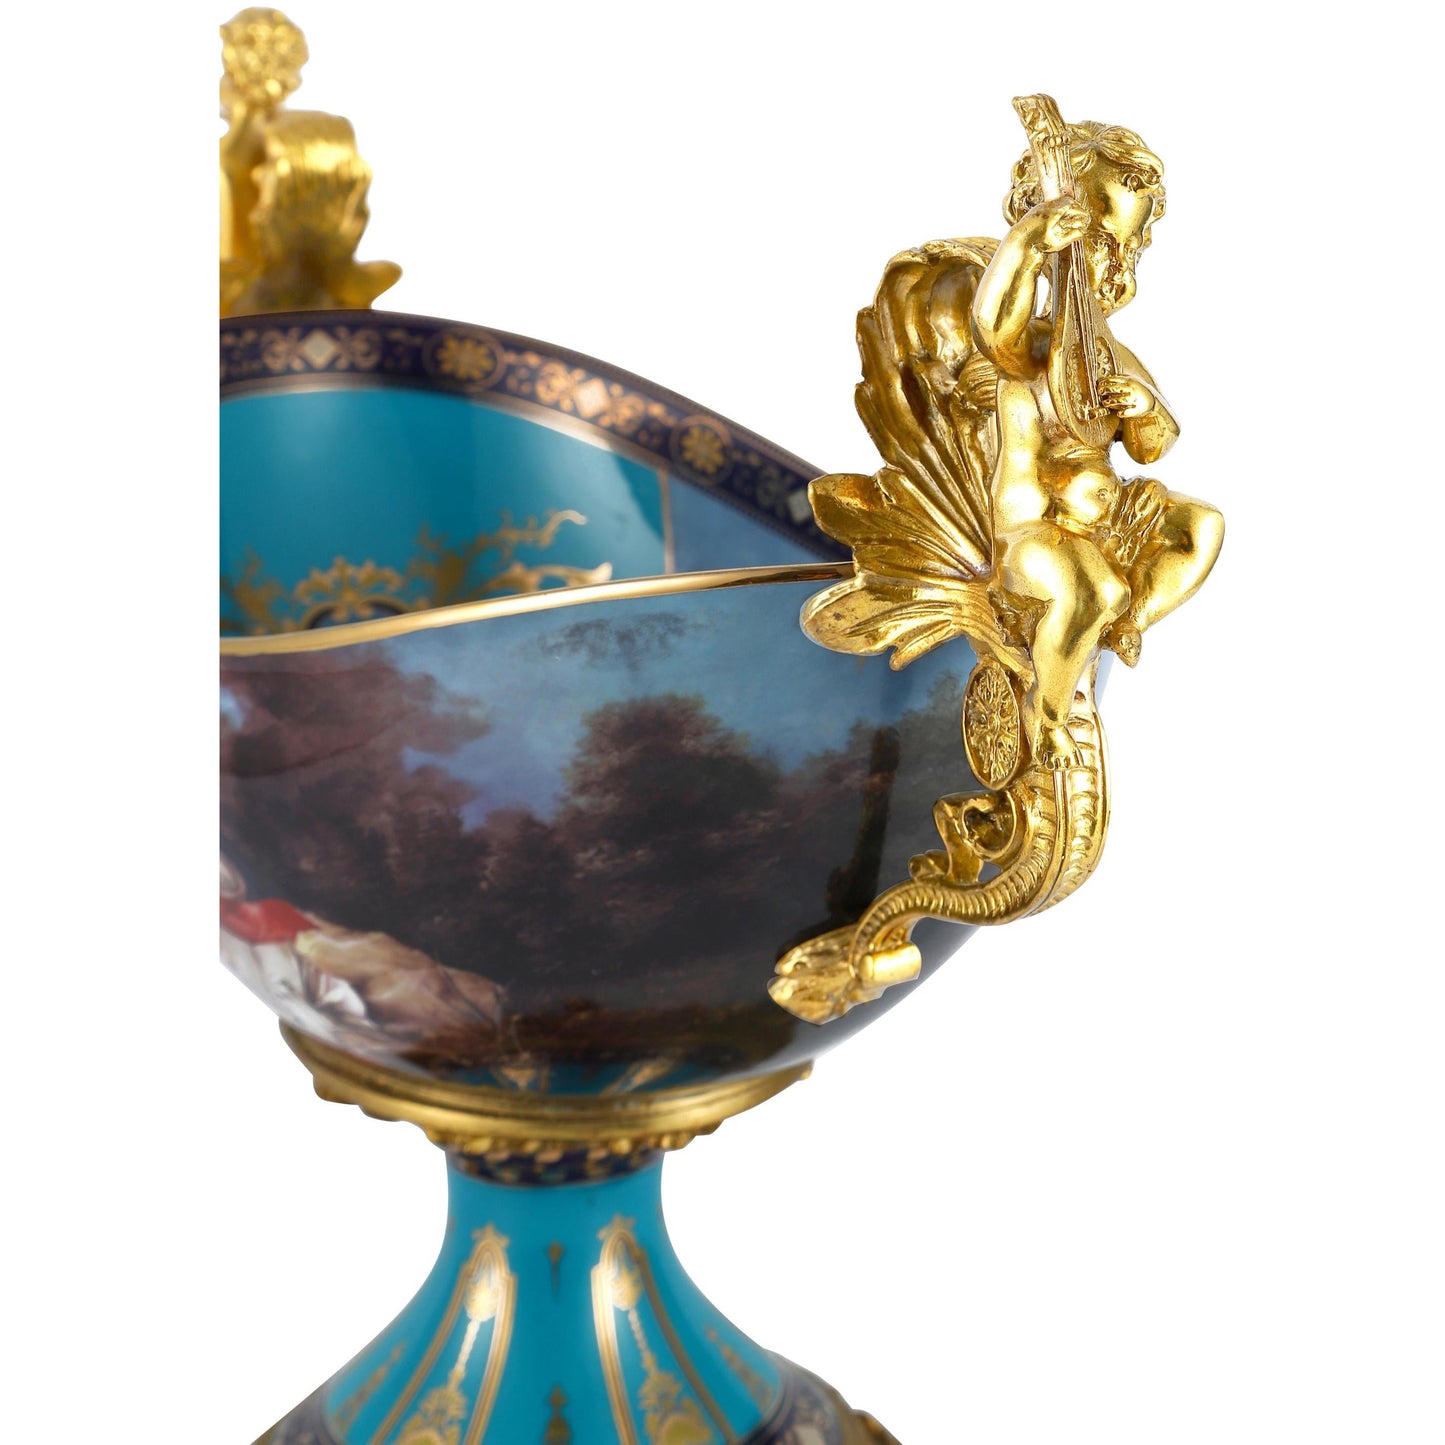 DECOELEVEN ™ Cherub Porcelain and Bronze Fruit Bowl